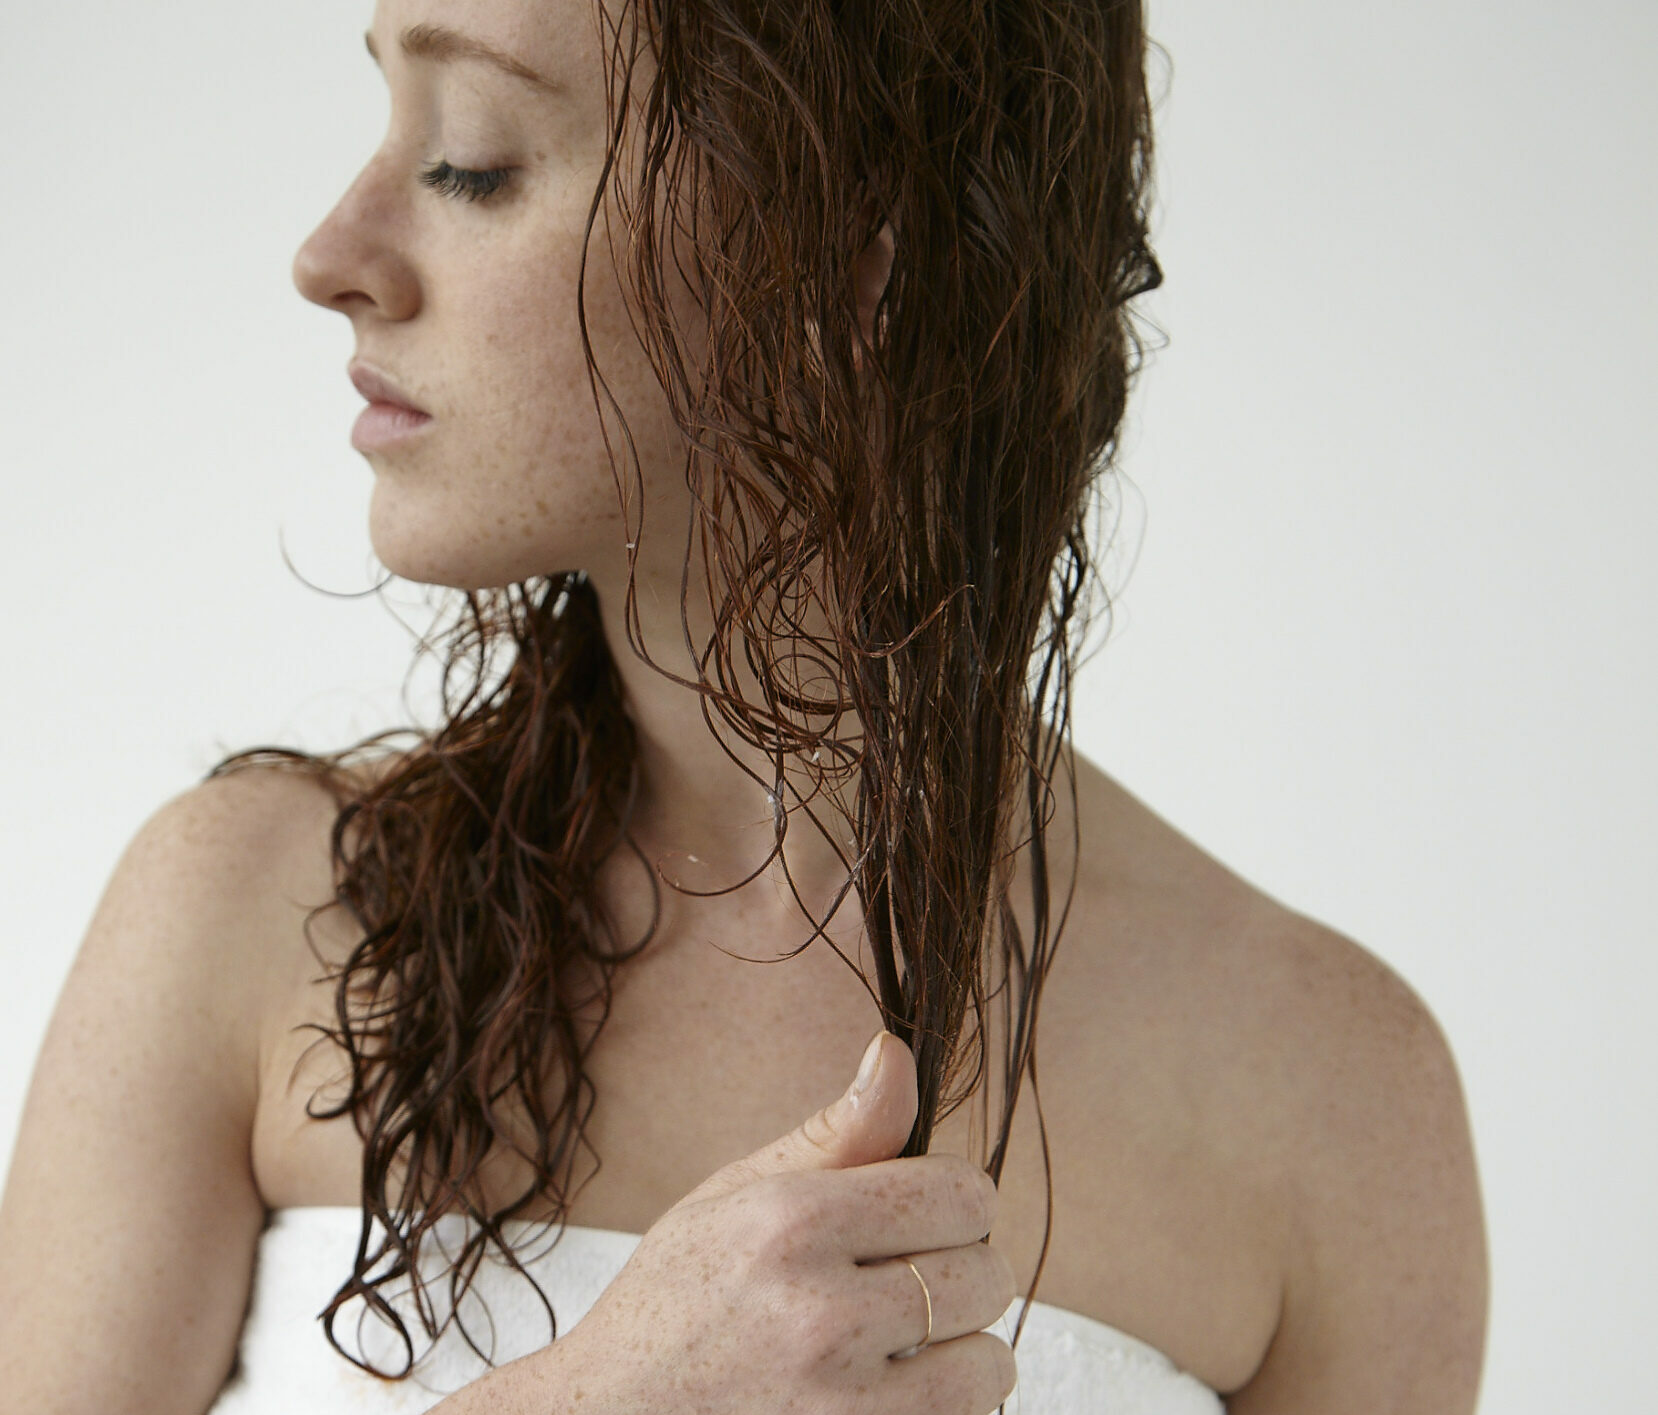 5 Shower Smarter Tips to Avoid Dry, Redhead Skin